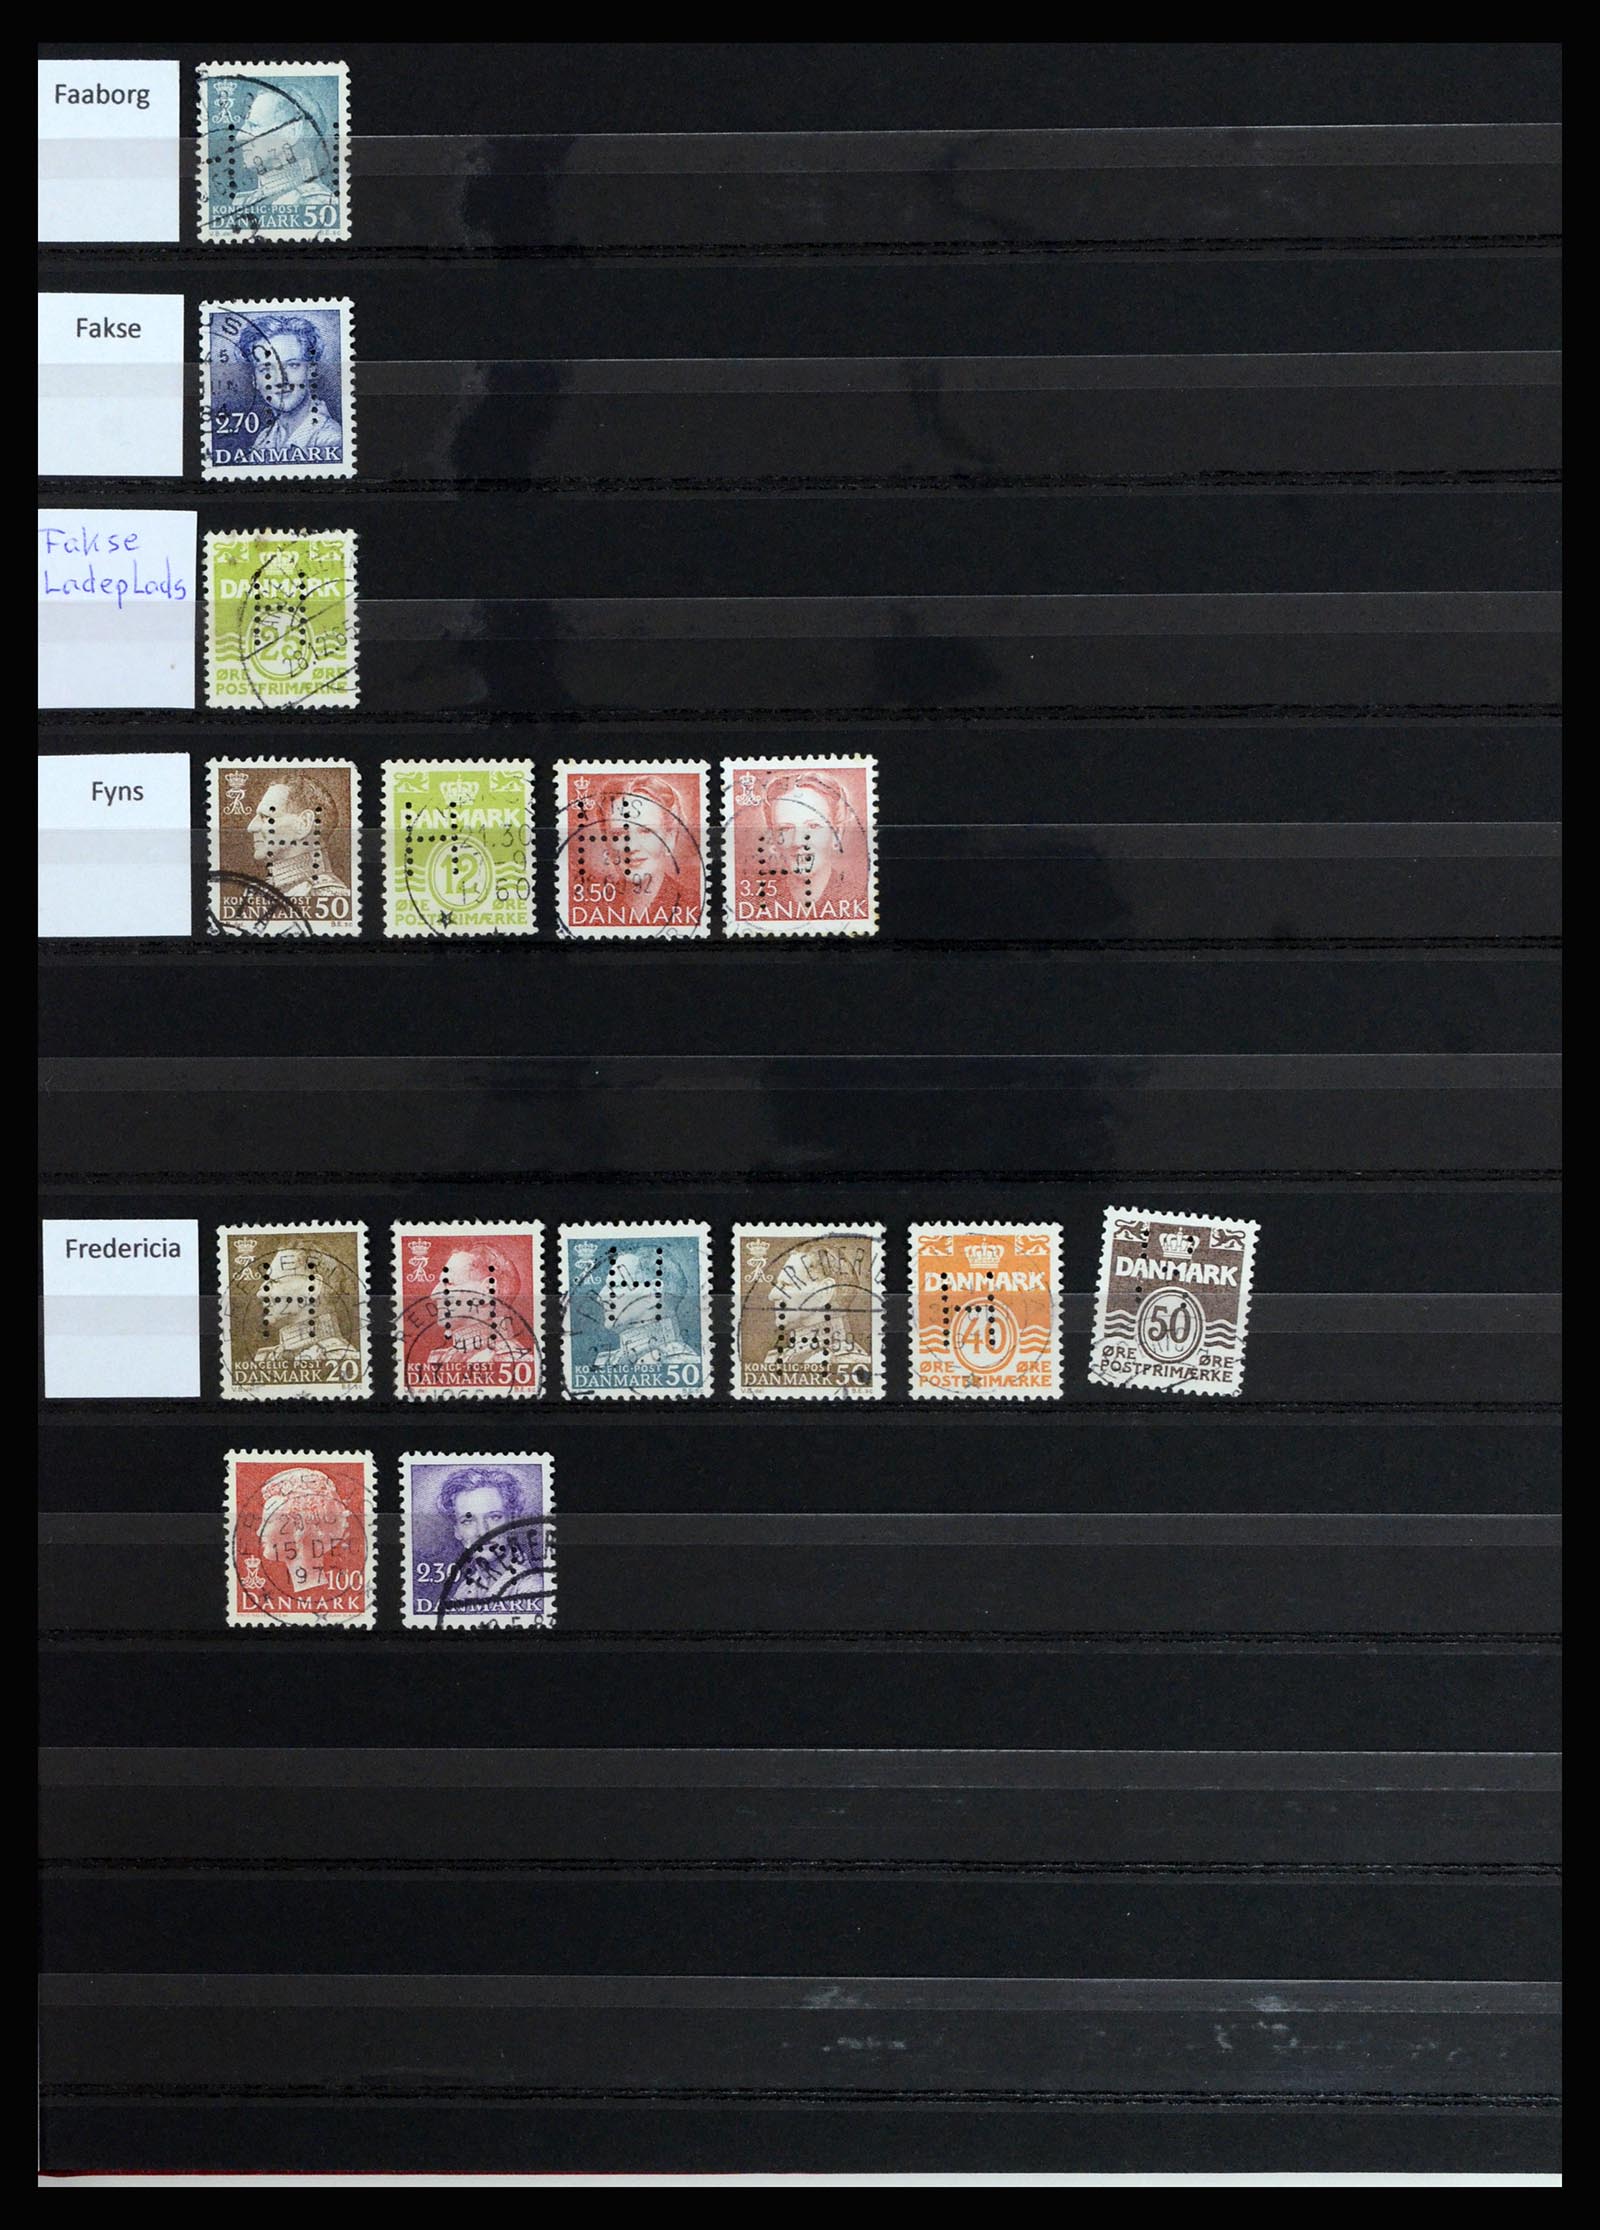 37056 003 - Stamp collection 37056 Denmark perfins.